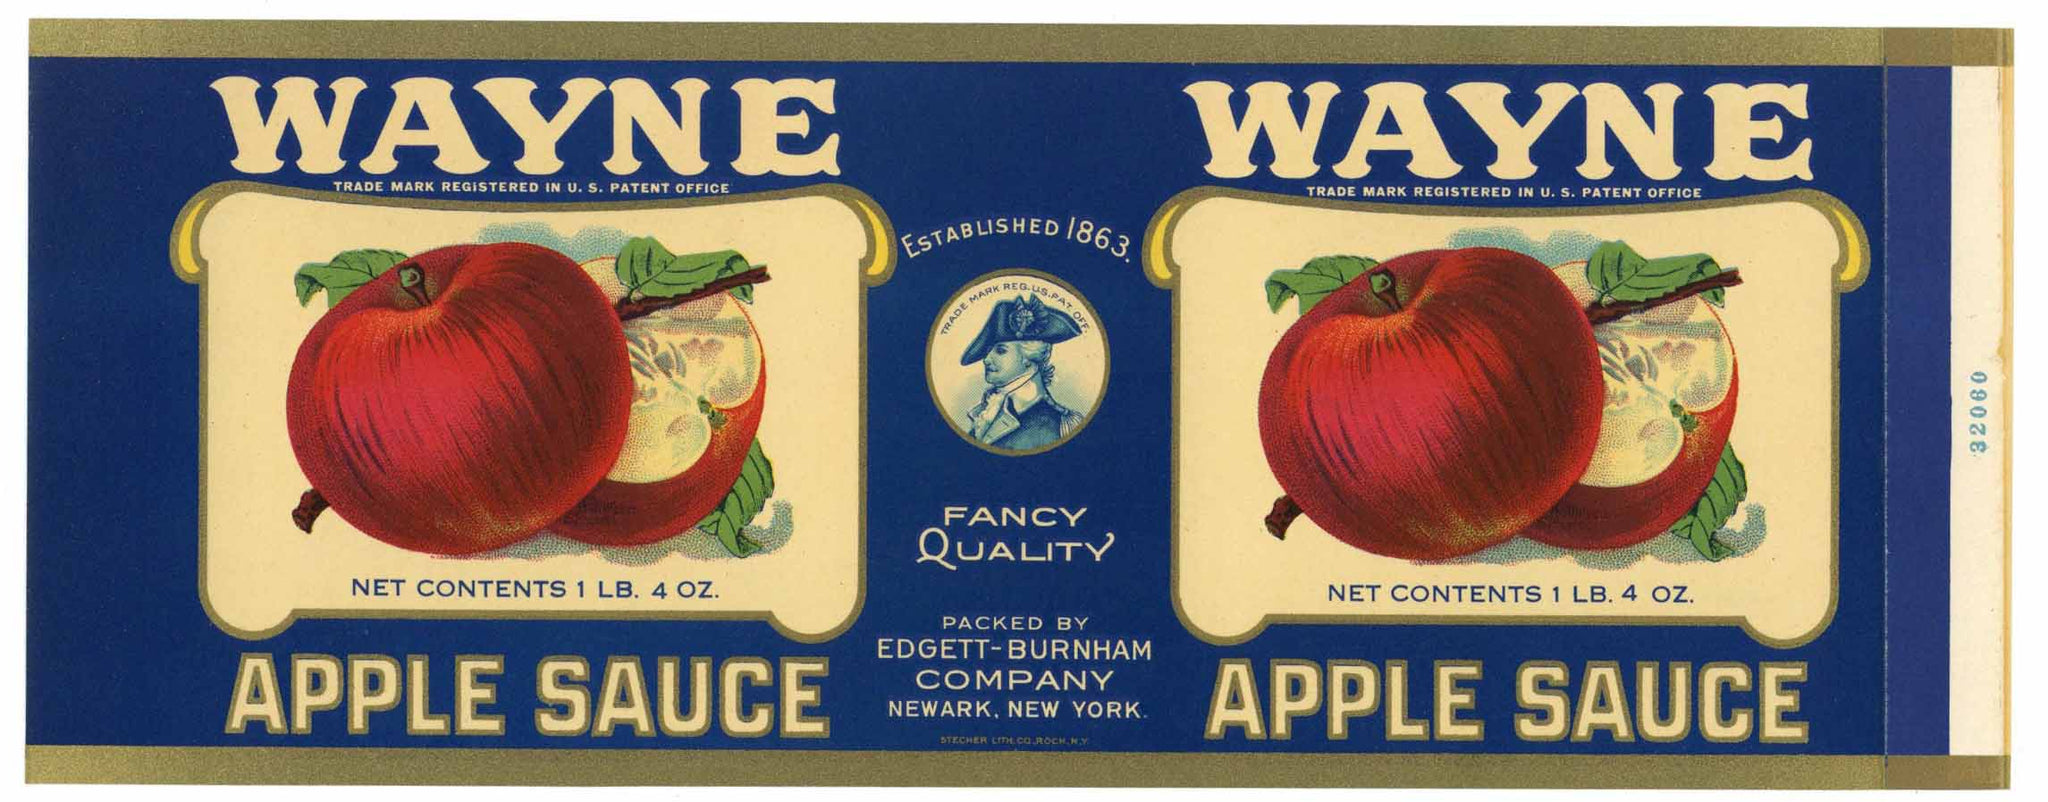 Wayne Brand Vintage Newark New York Apple Sauce Can Label